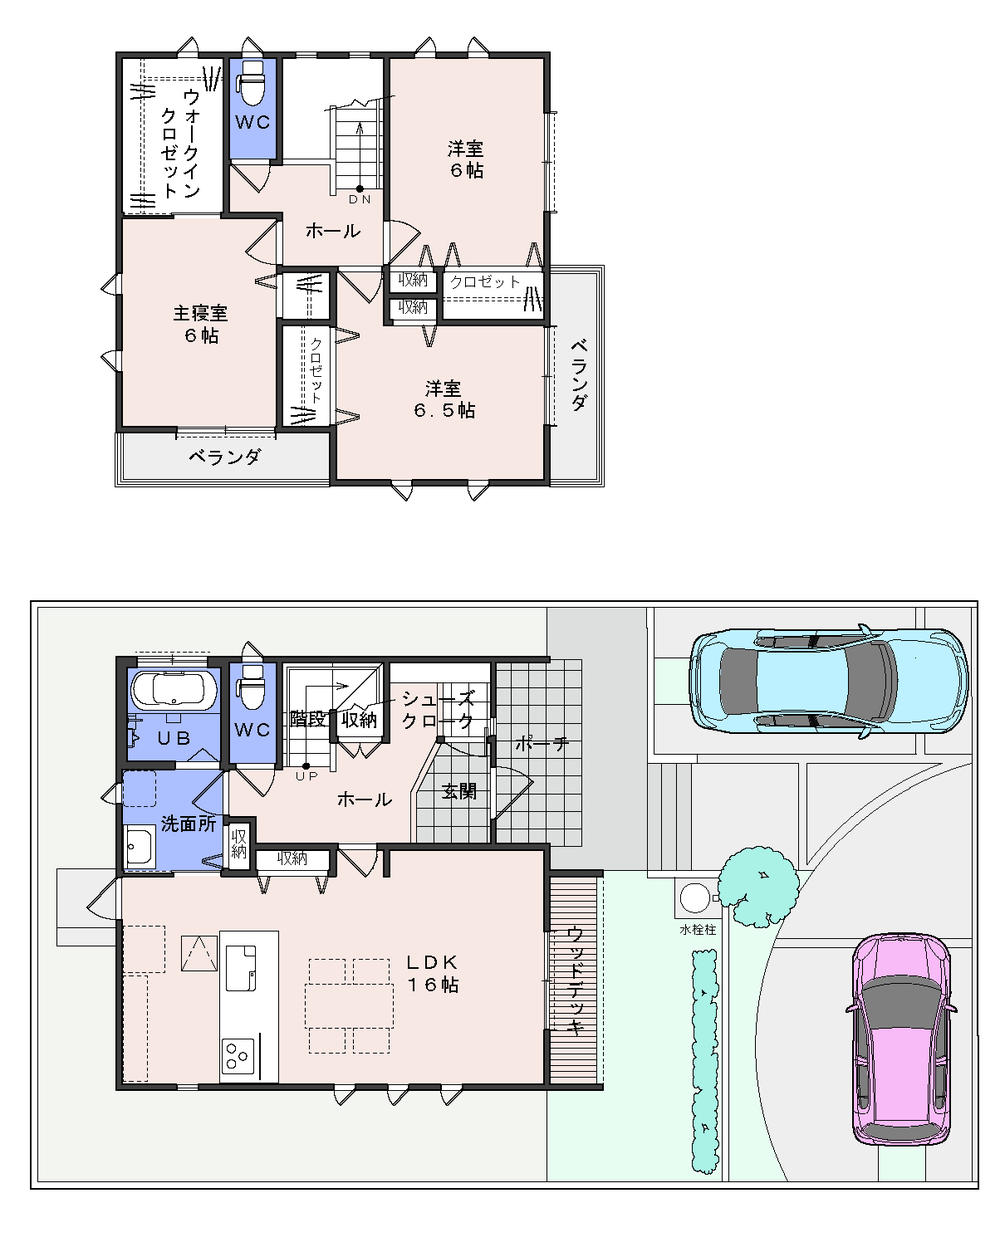 Floor plan. (4 Building), Price 27.3 million yen, 4LDK, Land area 161.05 sq m , Building area 99.78 sq m